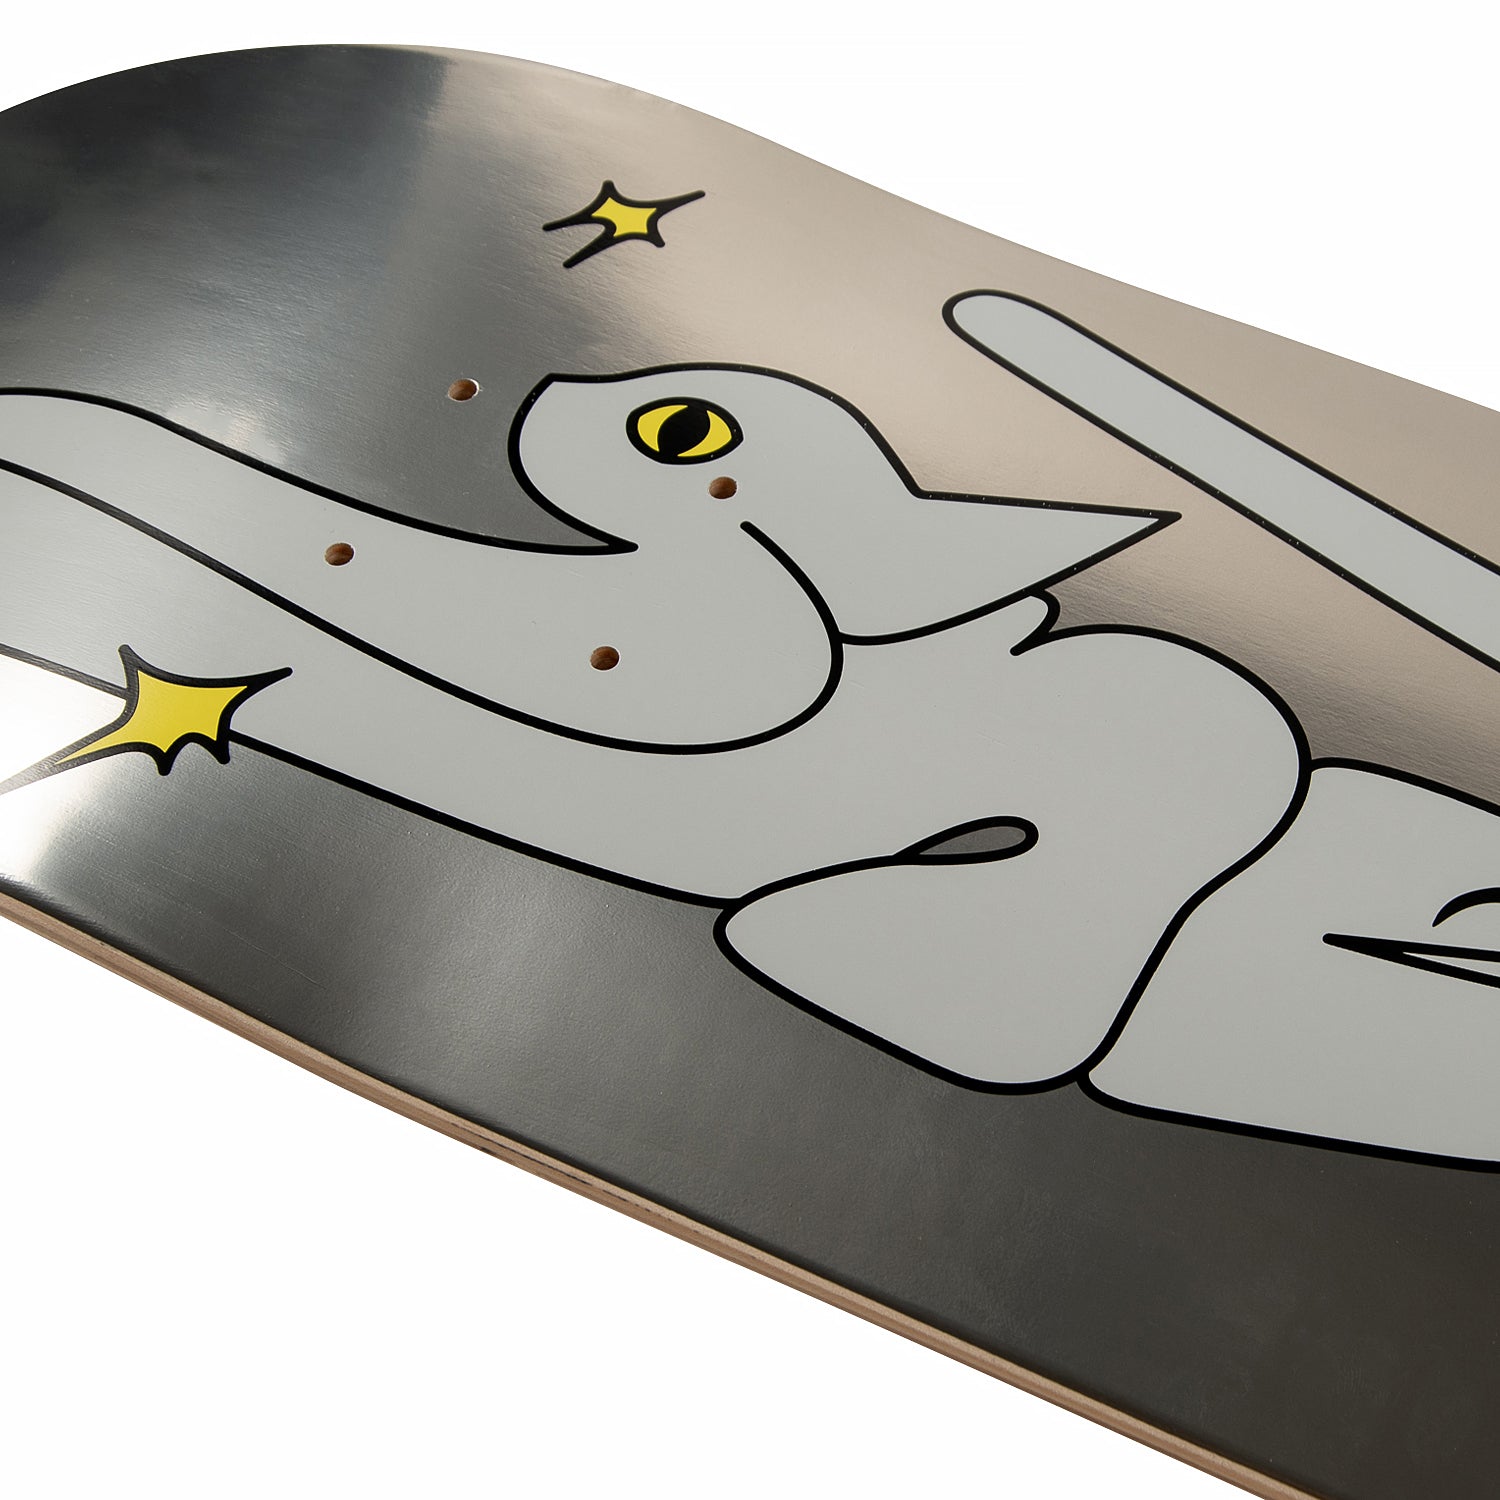 SNEEZE x QUICKSILVER Skateboard